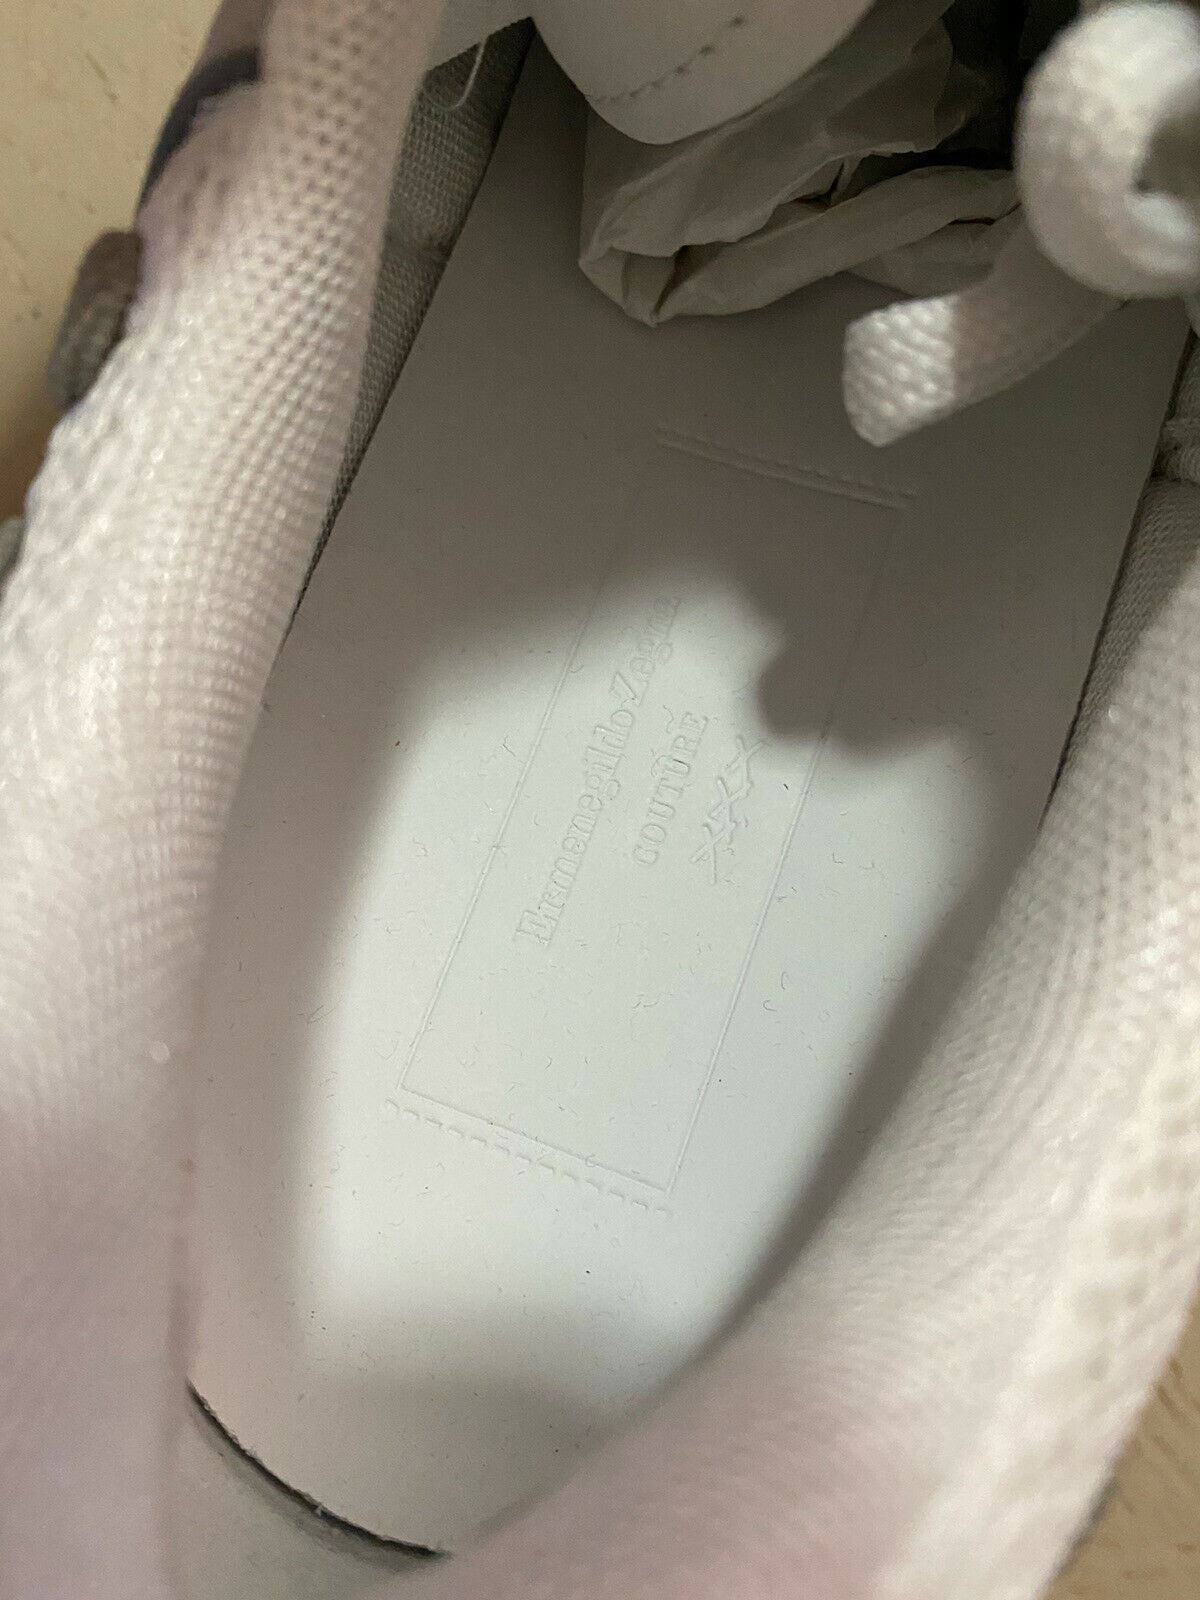 New $795 Ermenegildo Zegna Couture Leather Sneakers Shoes White/Gray 10.5 US Ita